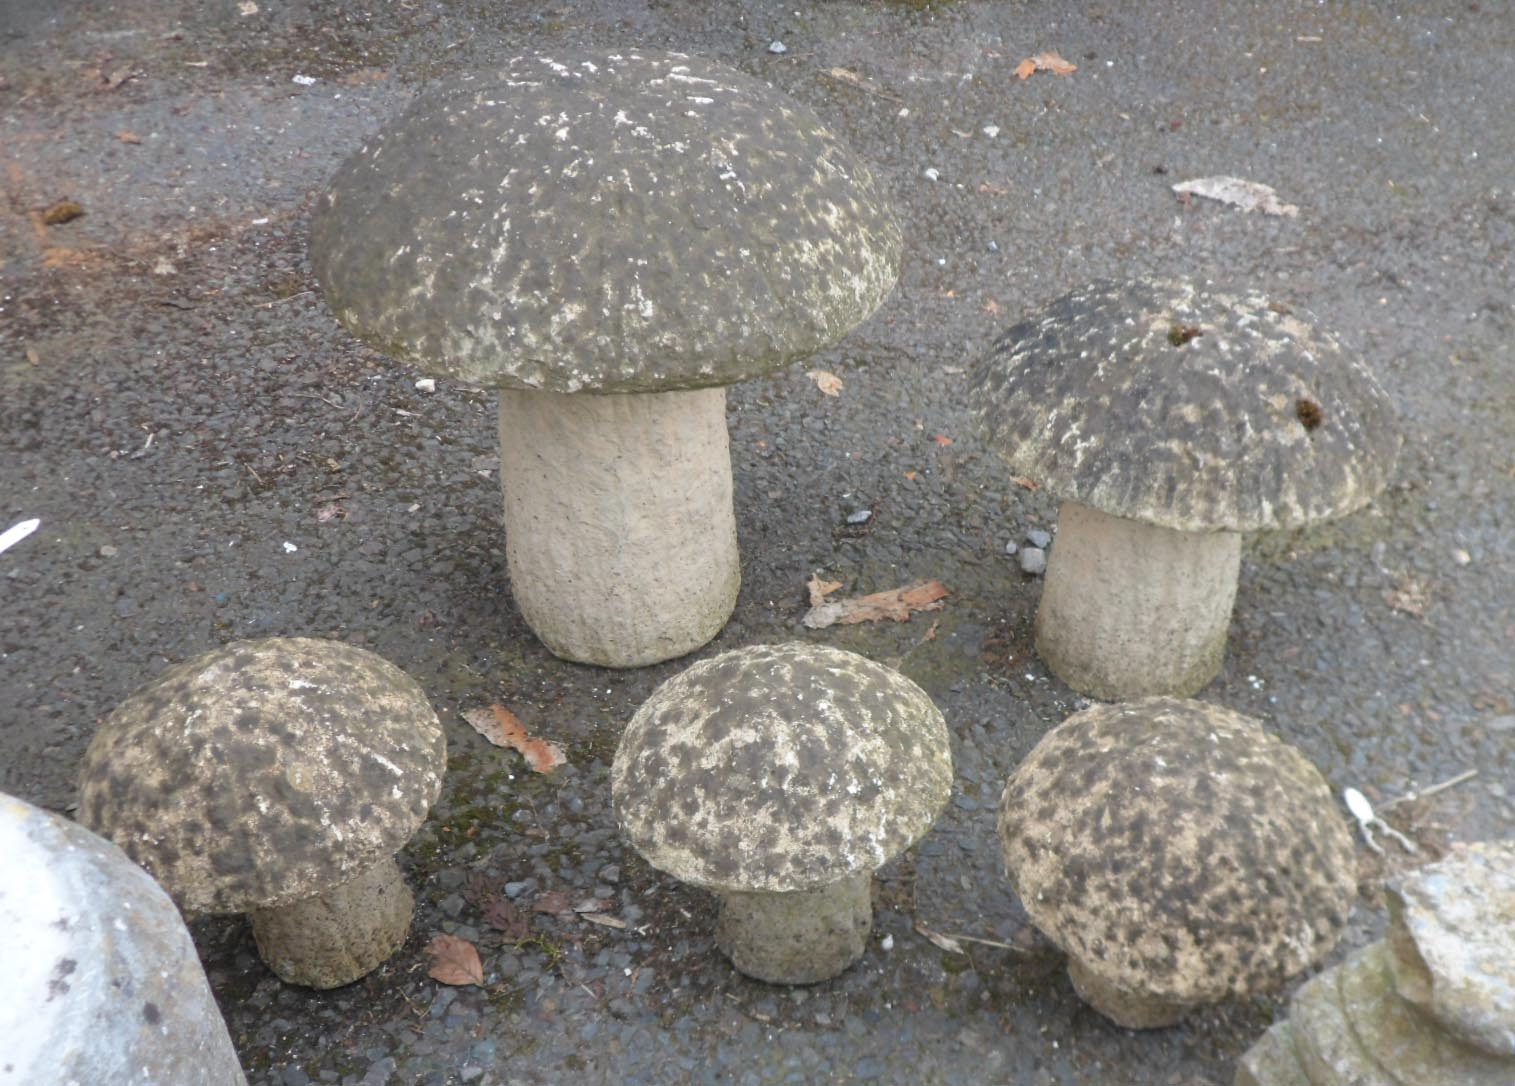 Five garden mushrooms - various sizes